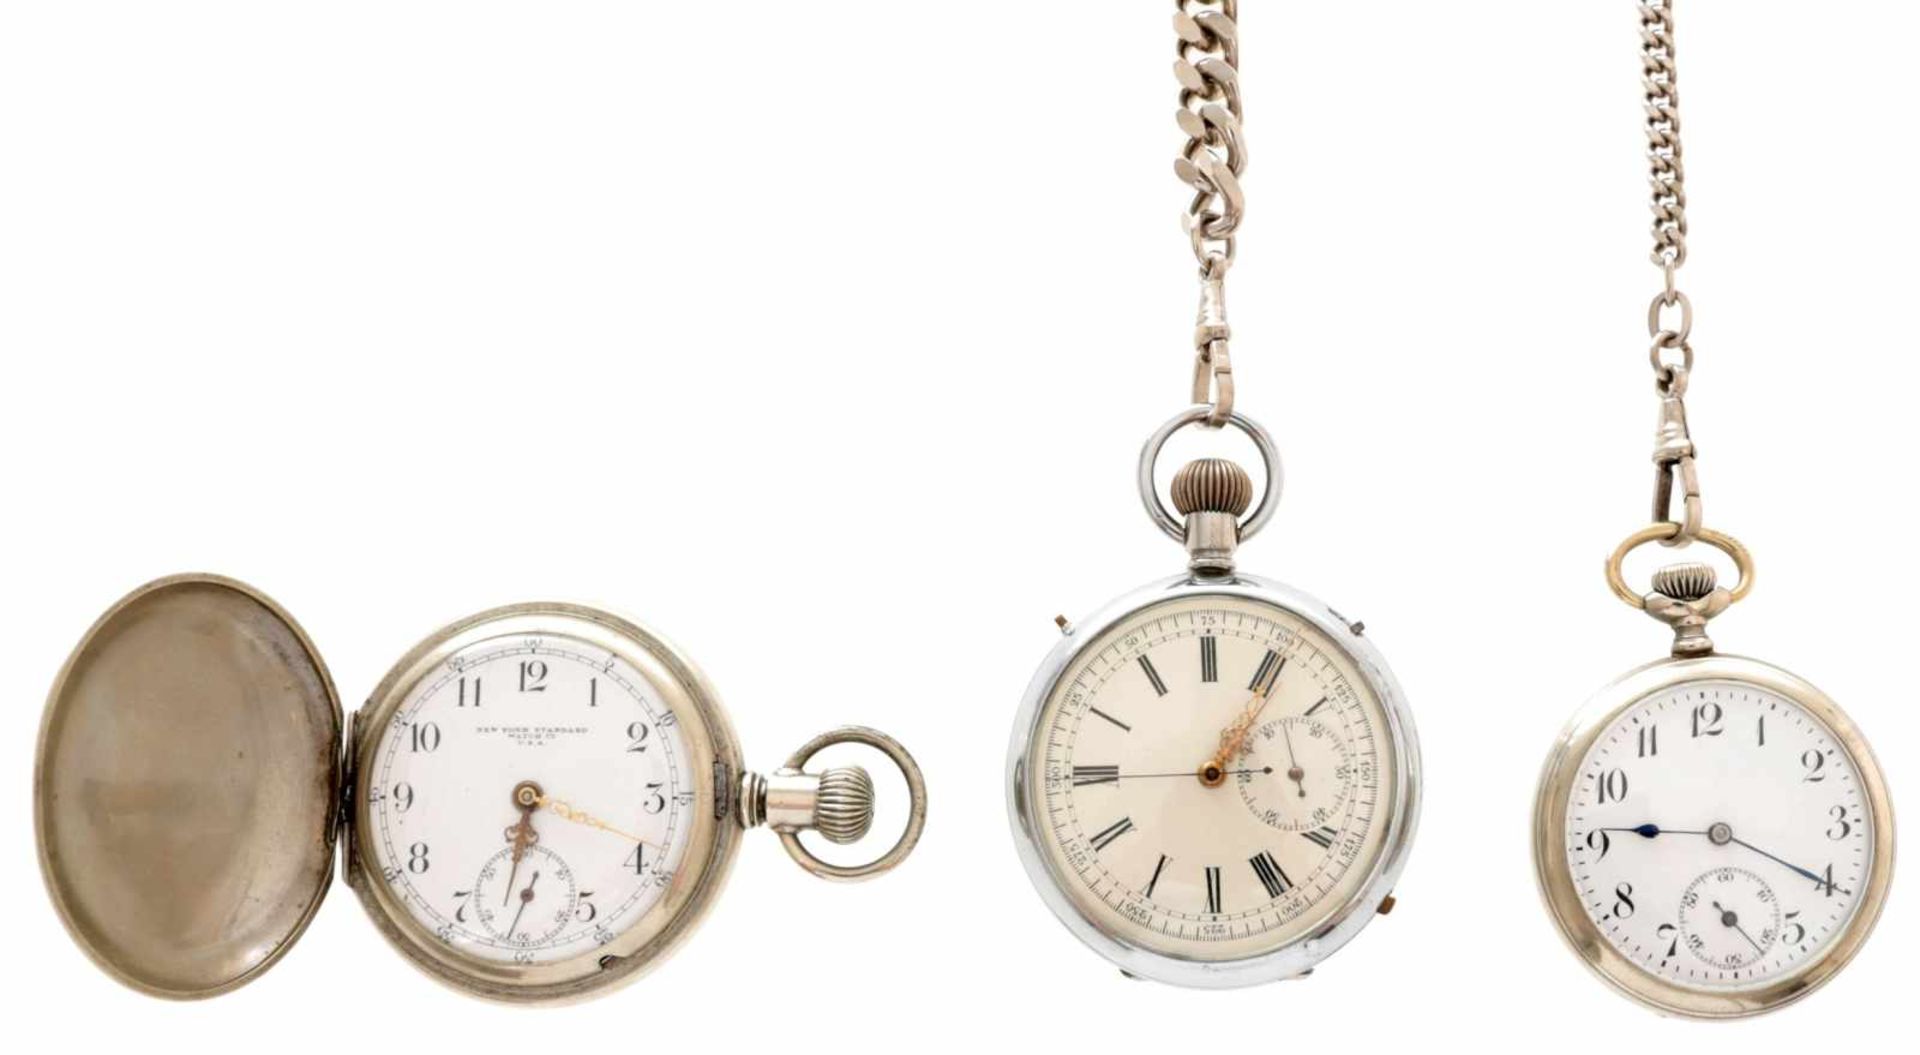 3 HerrentaschenuhrenMetall weiß, Junghans/New York Standard Watch Co. U.S.A., u. andere, um 1900